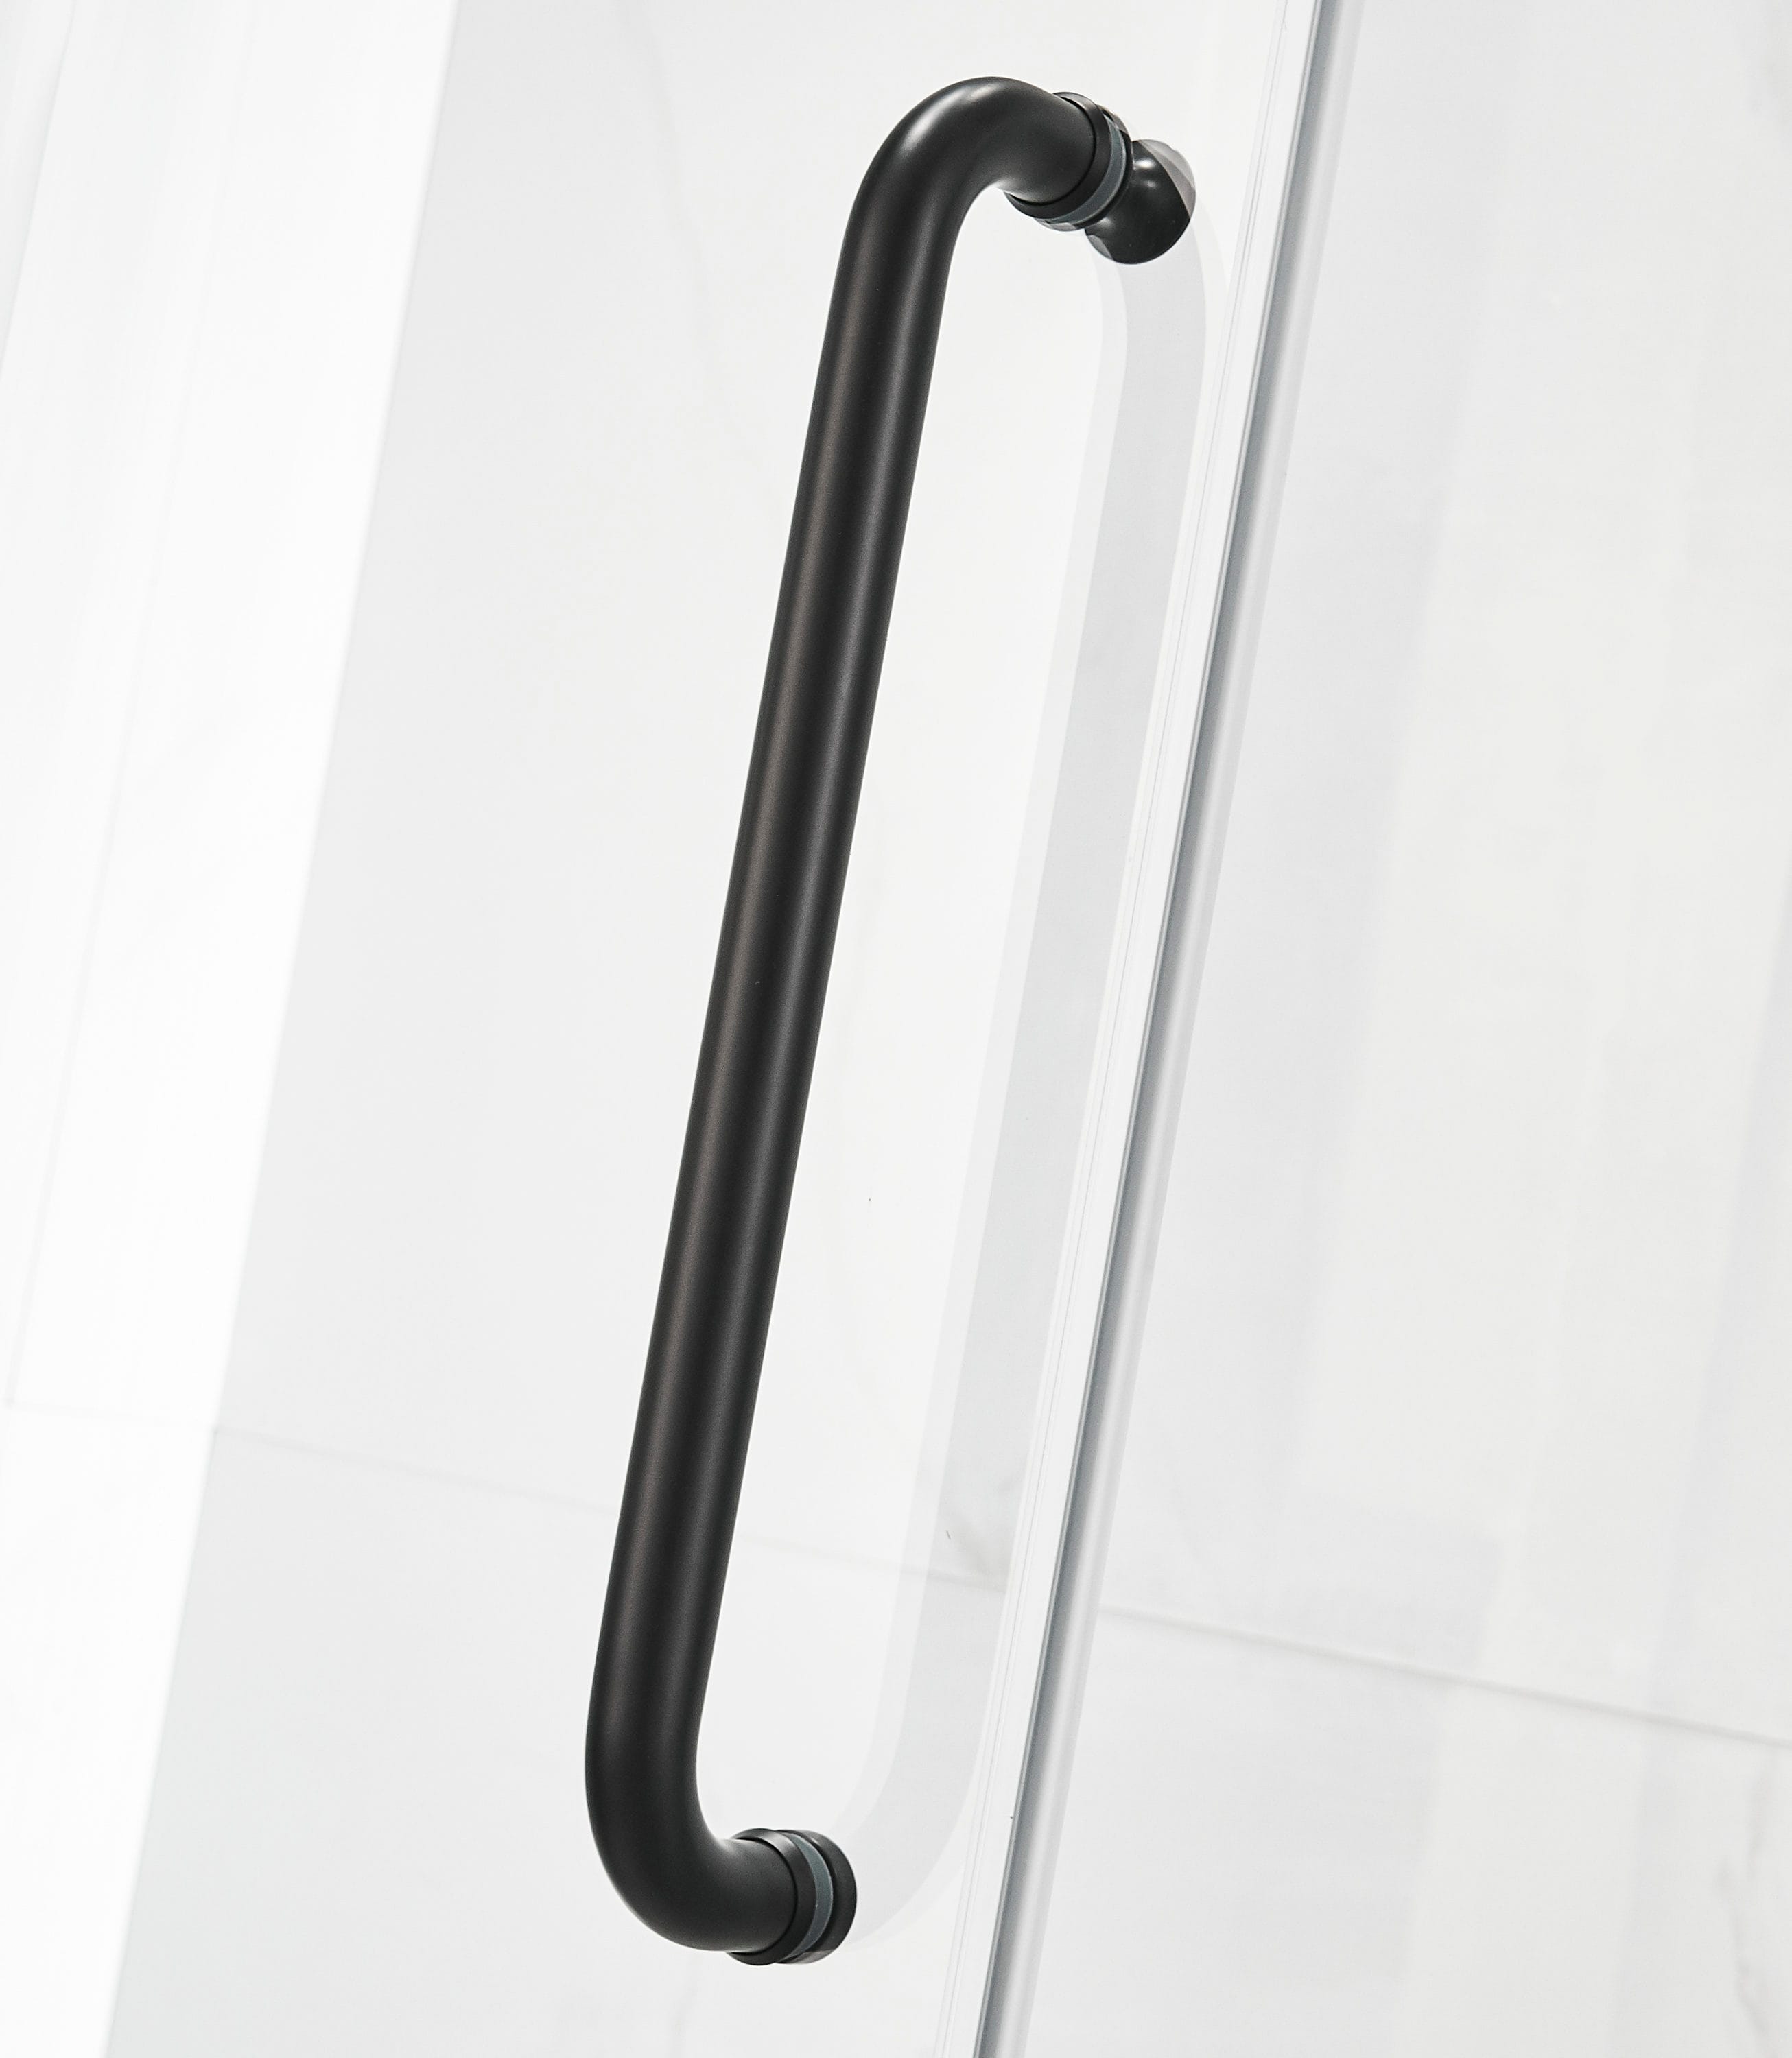 ANZZI Madam Series Matte Black 48-in x 76-in Frameless Sliding Shower Door